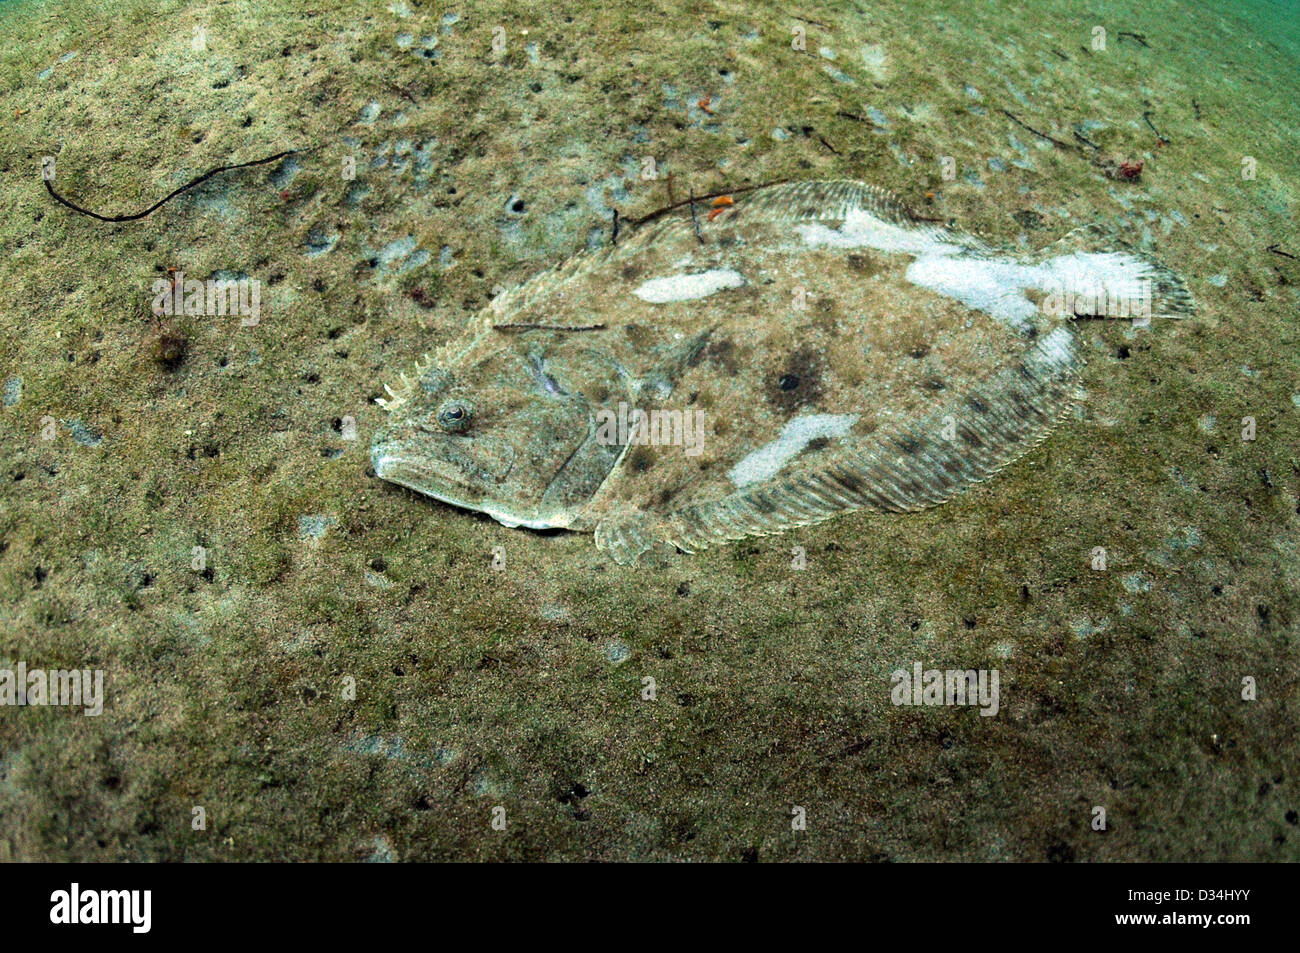 flounder or flatfish underwater in Atlantic Ocean Stock Photo